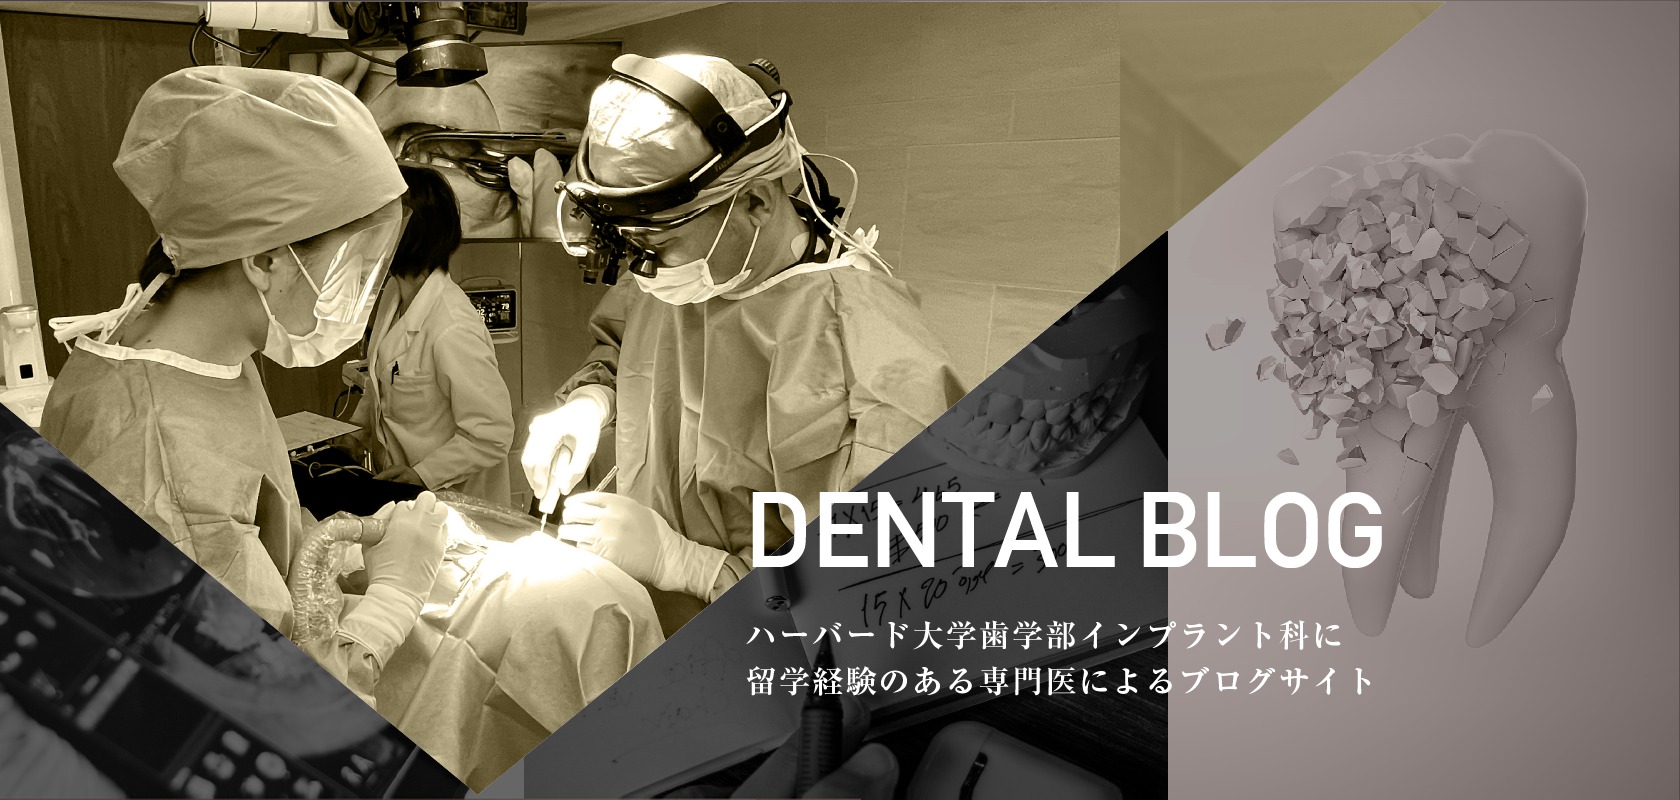 丸尾 勝一郎 Dental Blog